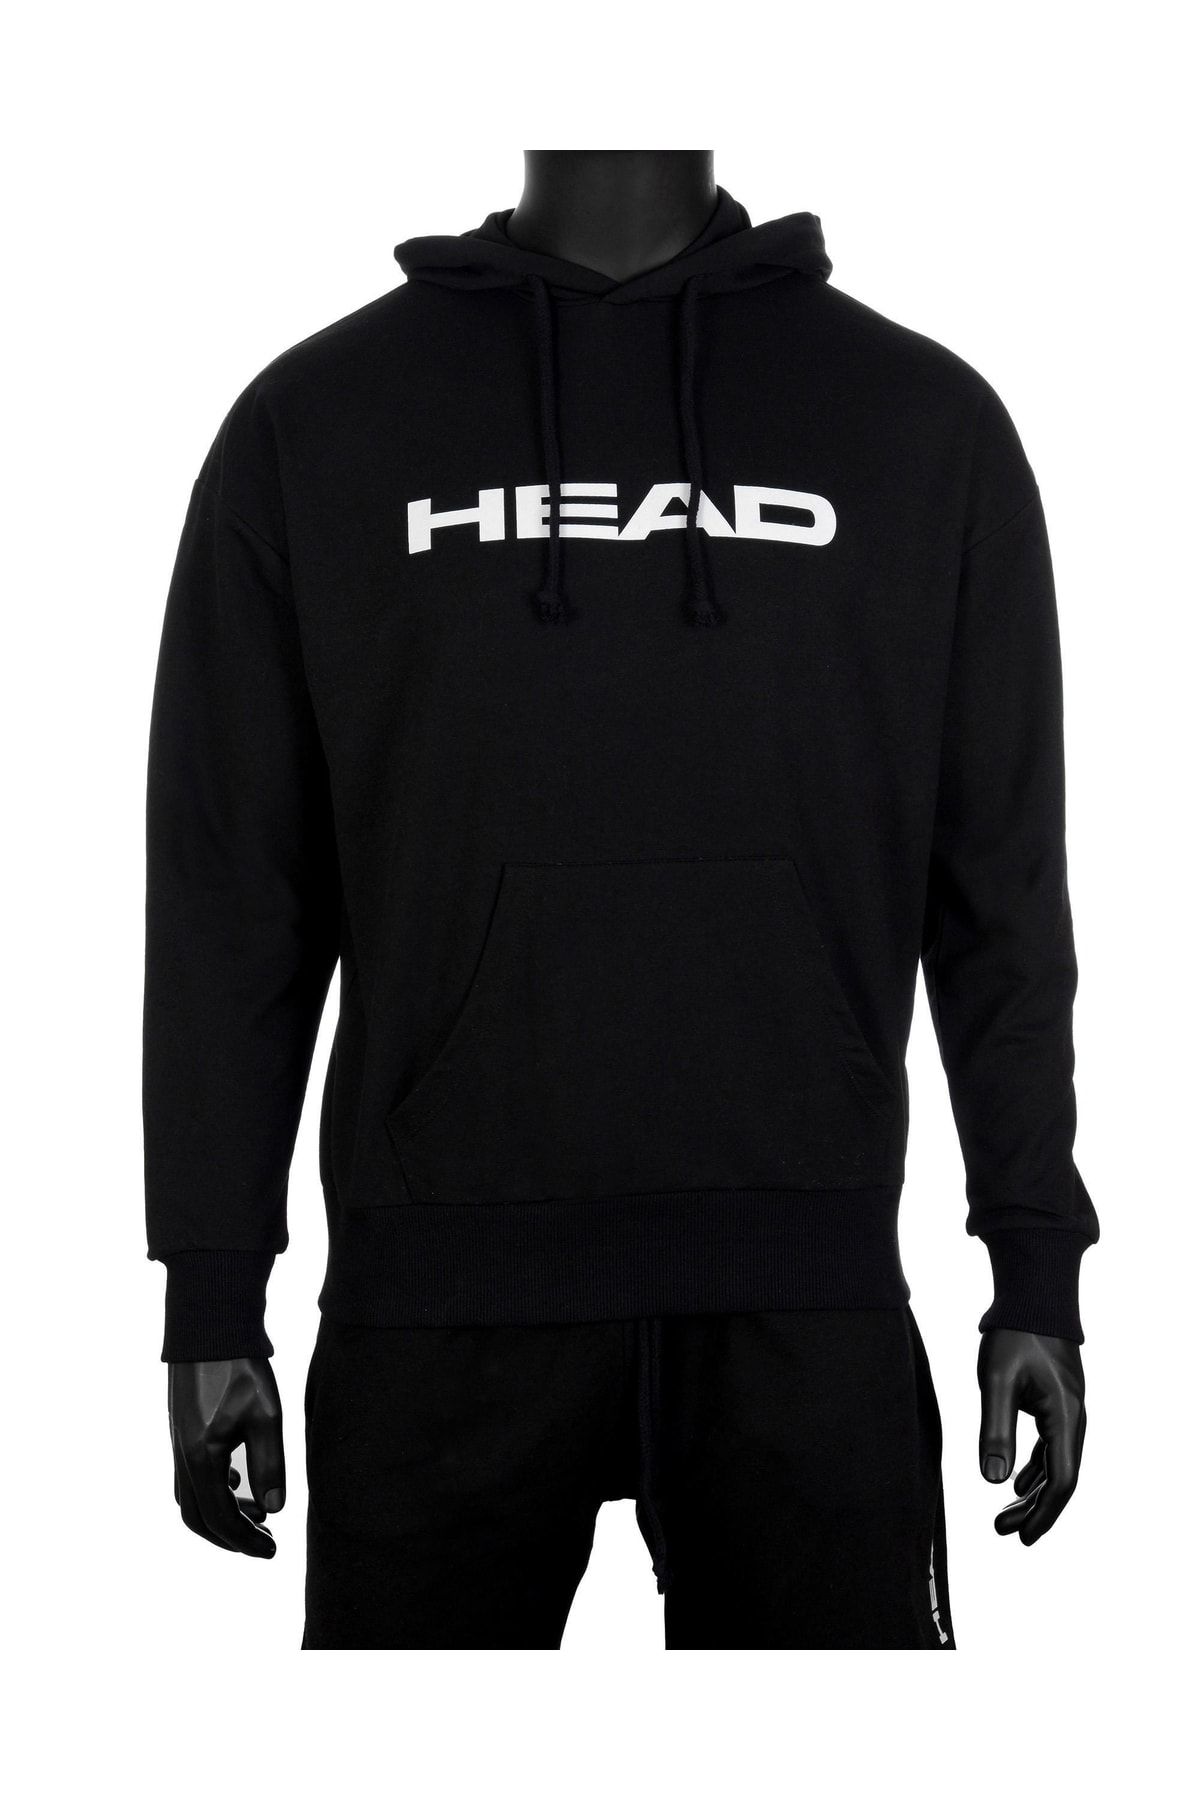 Head Erkek Siyah Logo Baskılı Mevsimlik Spor Kapüşonlu Pamuklu Basic Tenis Hoodie Sweatshirt